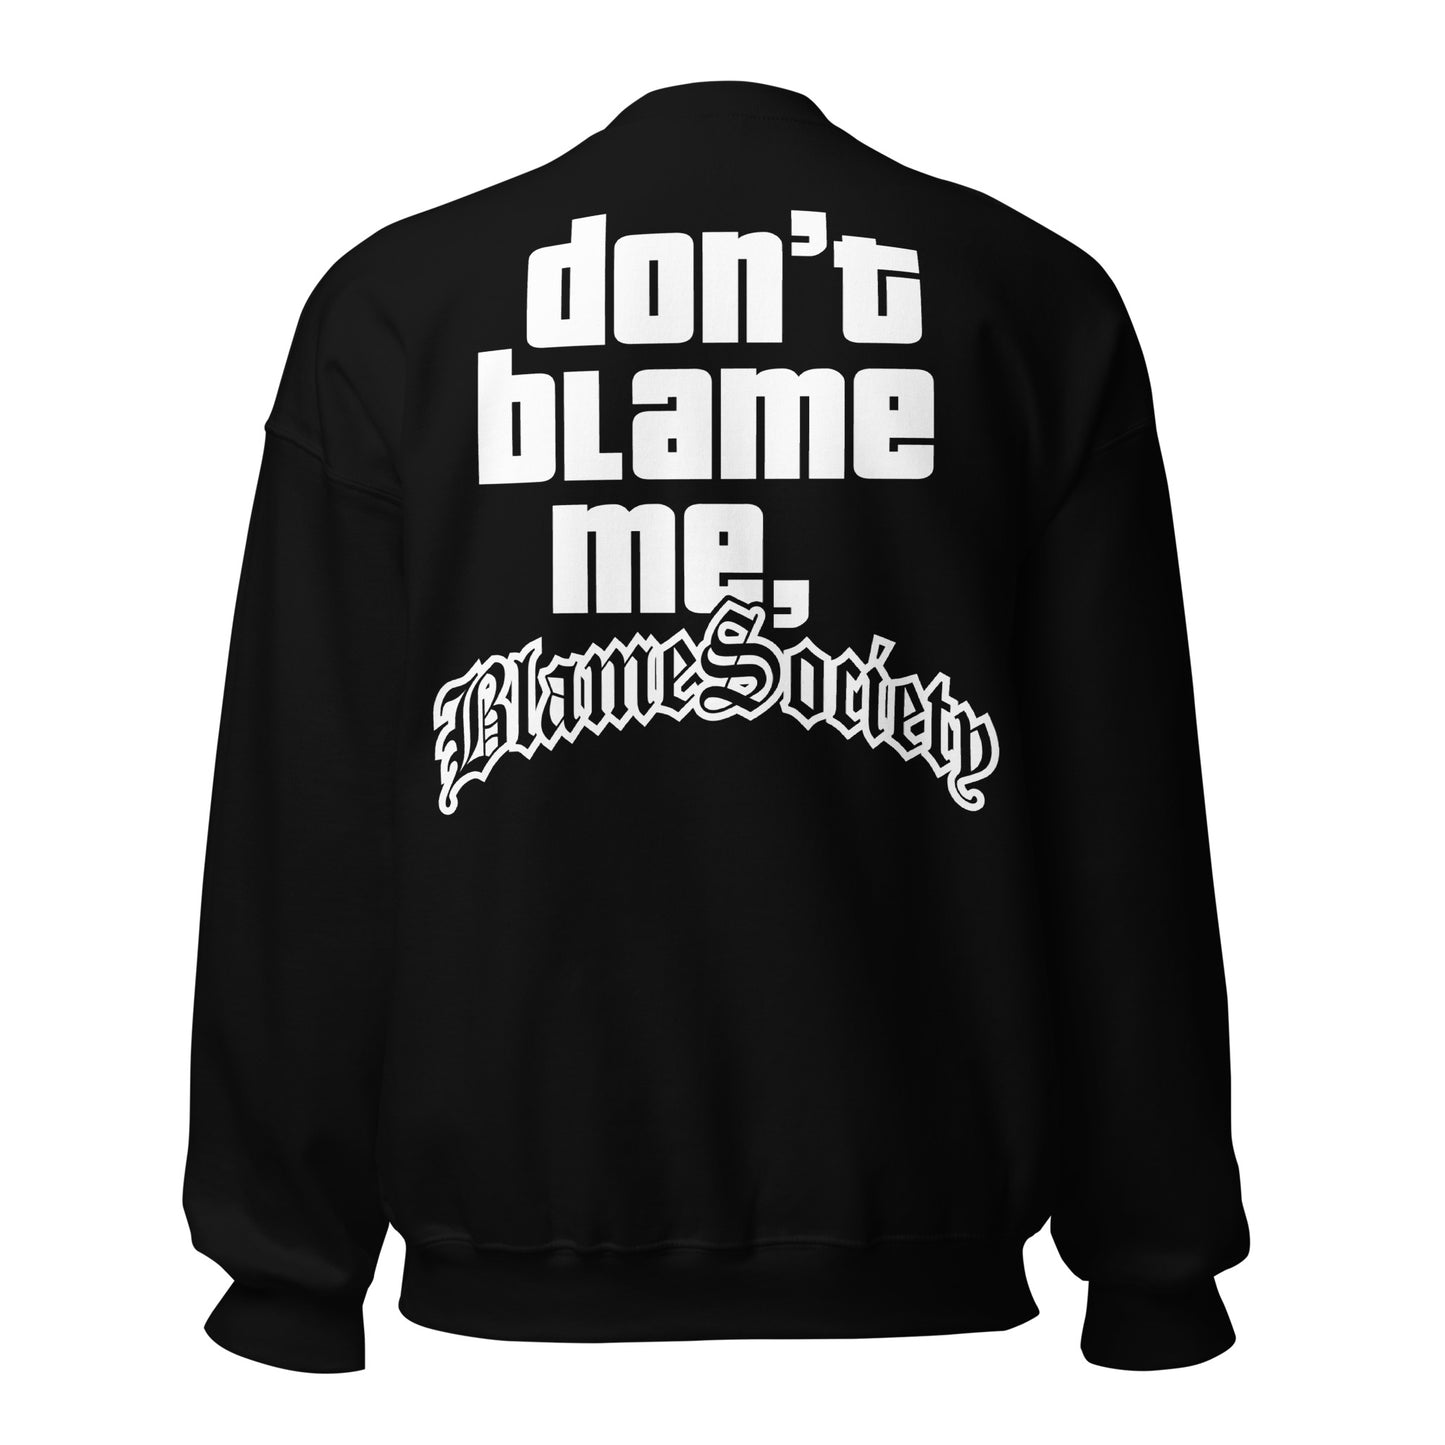 Blame Society crewneck sweatshirt